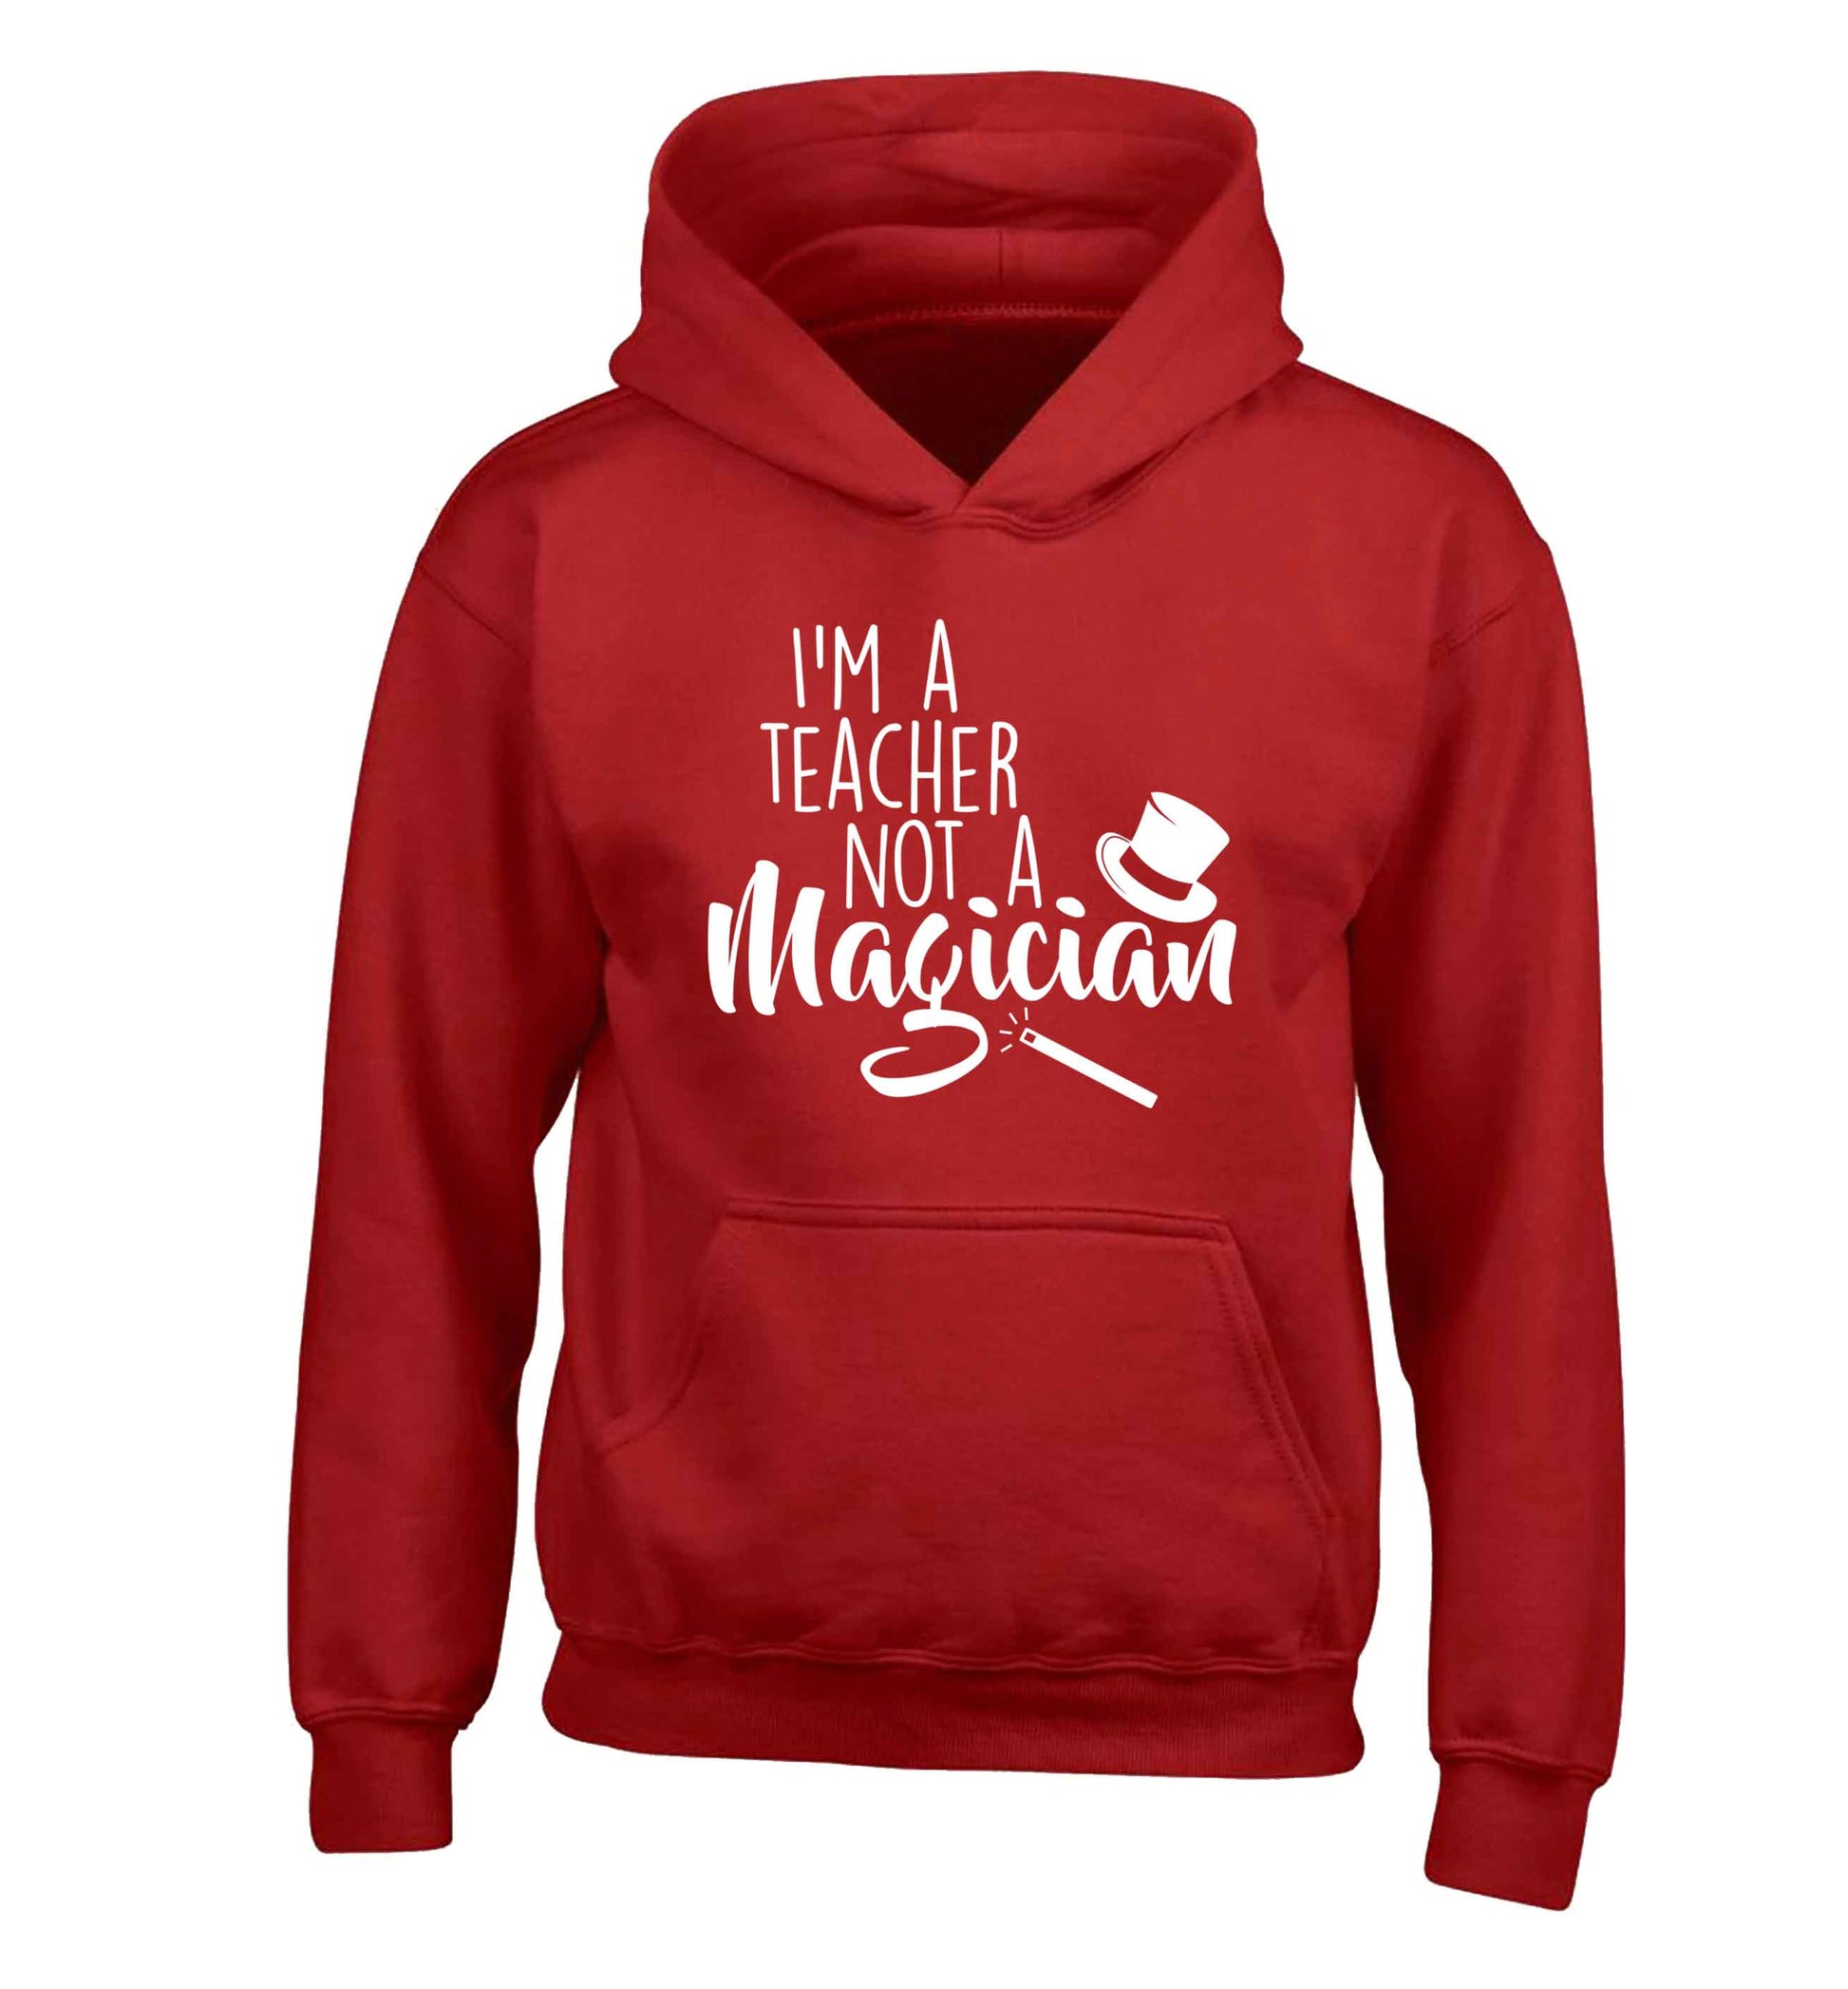 I'm a teacher not a magician children's red hoodie 12-13 Years